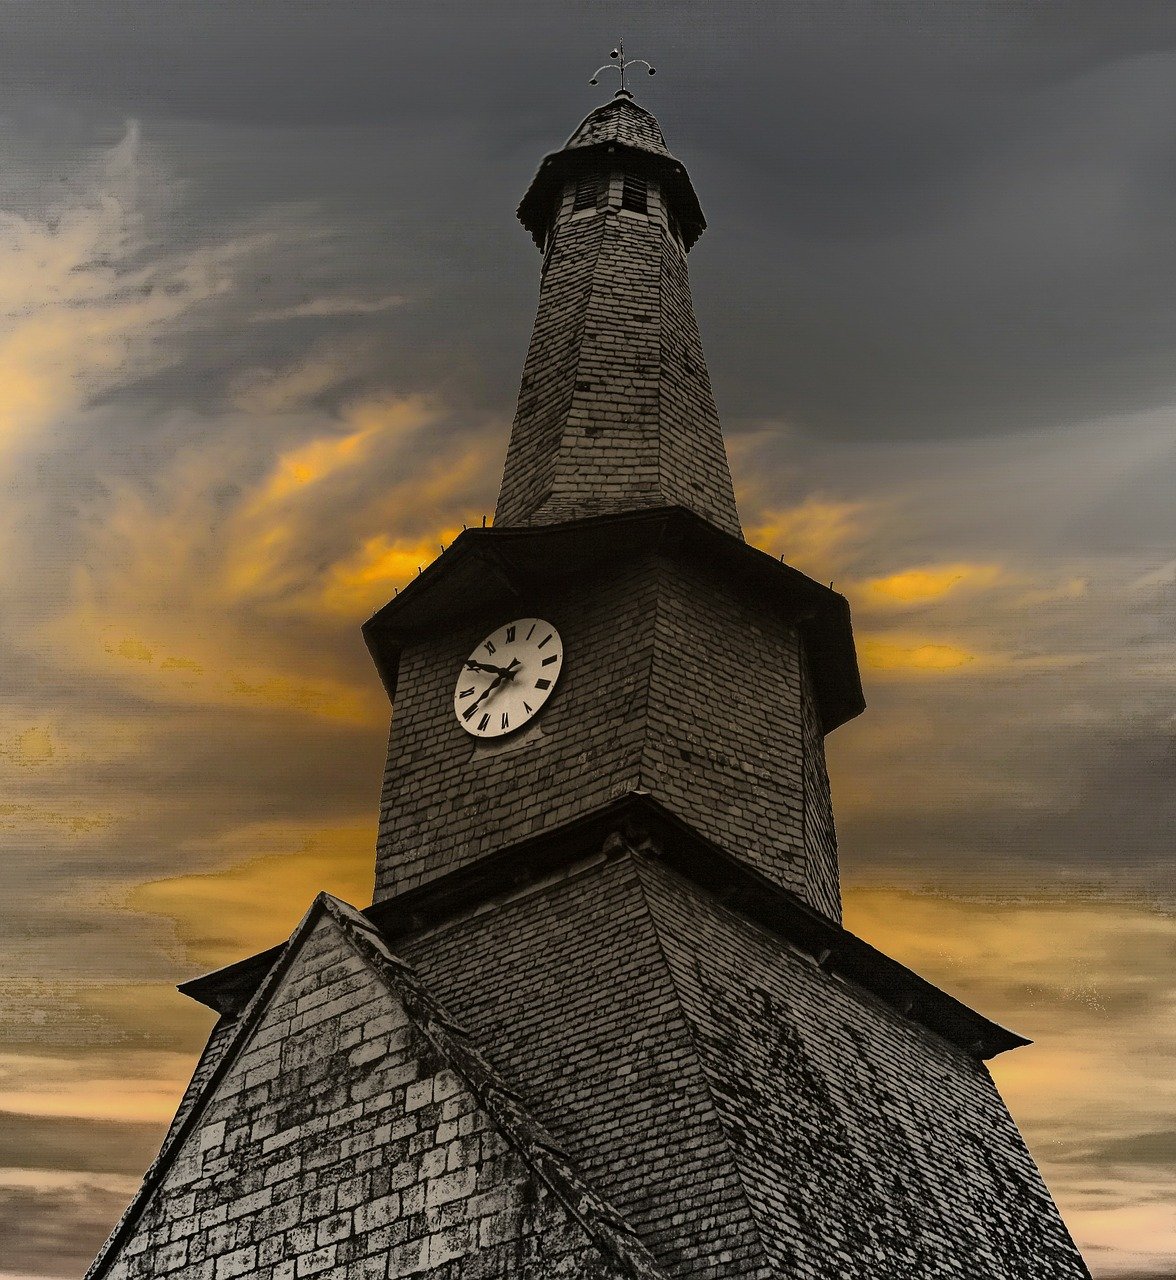 aguja torcida, antiguo chapitel, torre de la iglesia